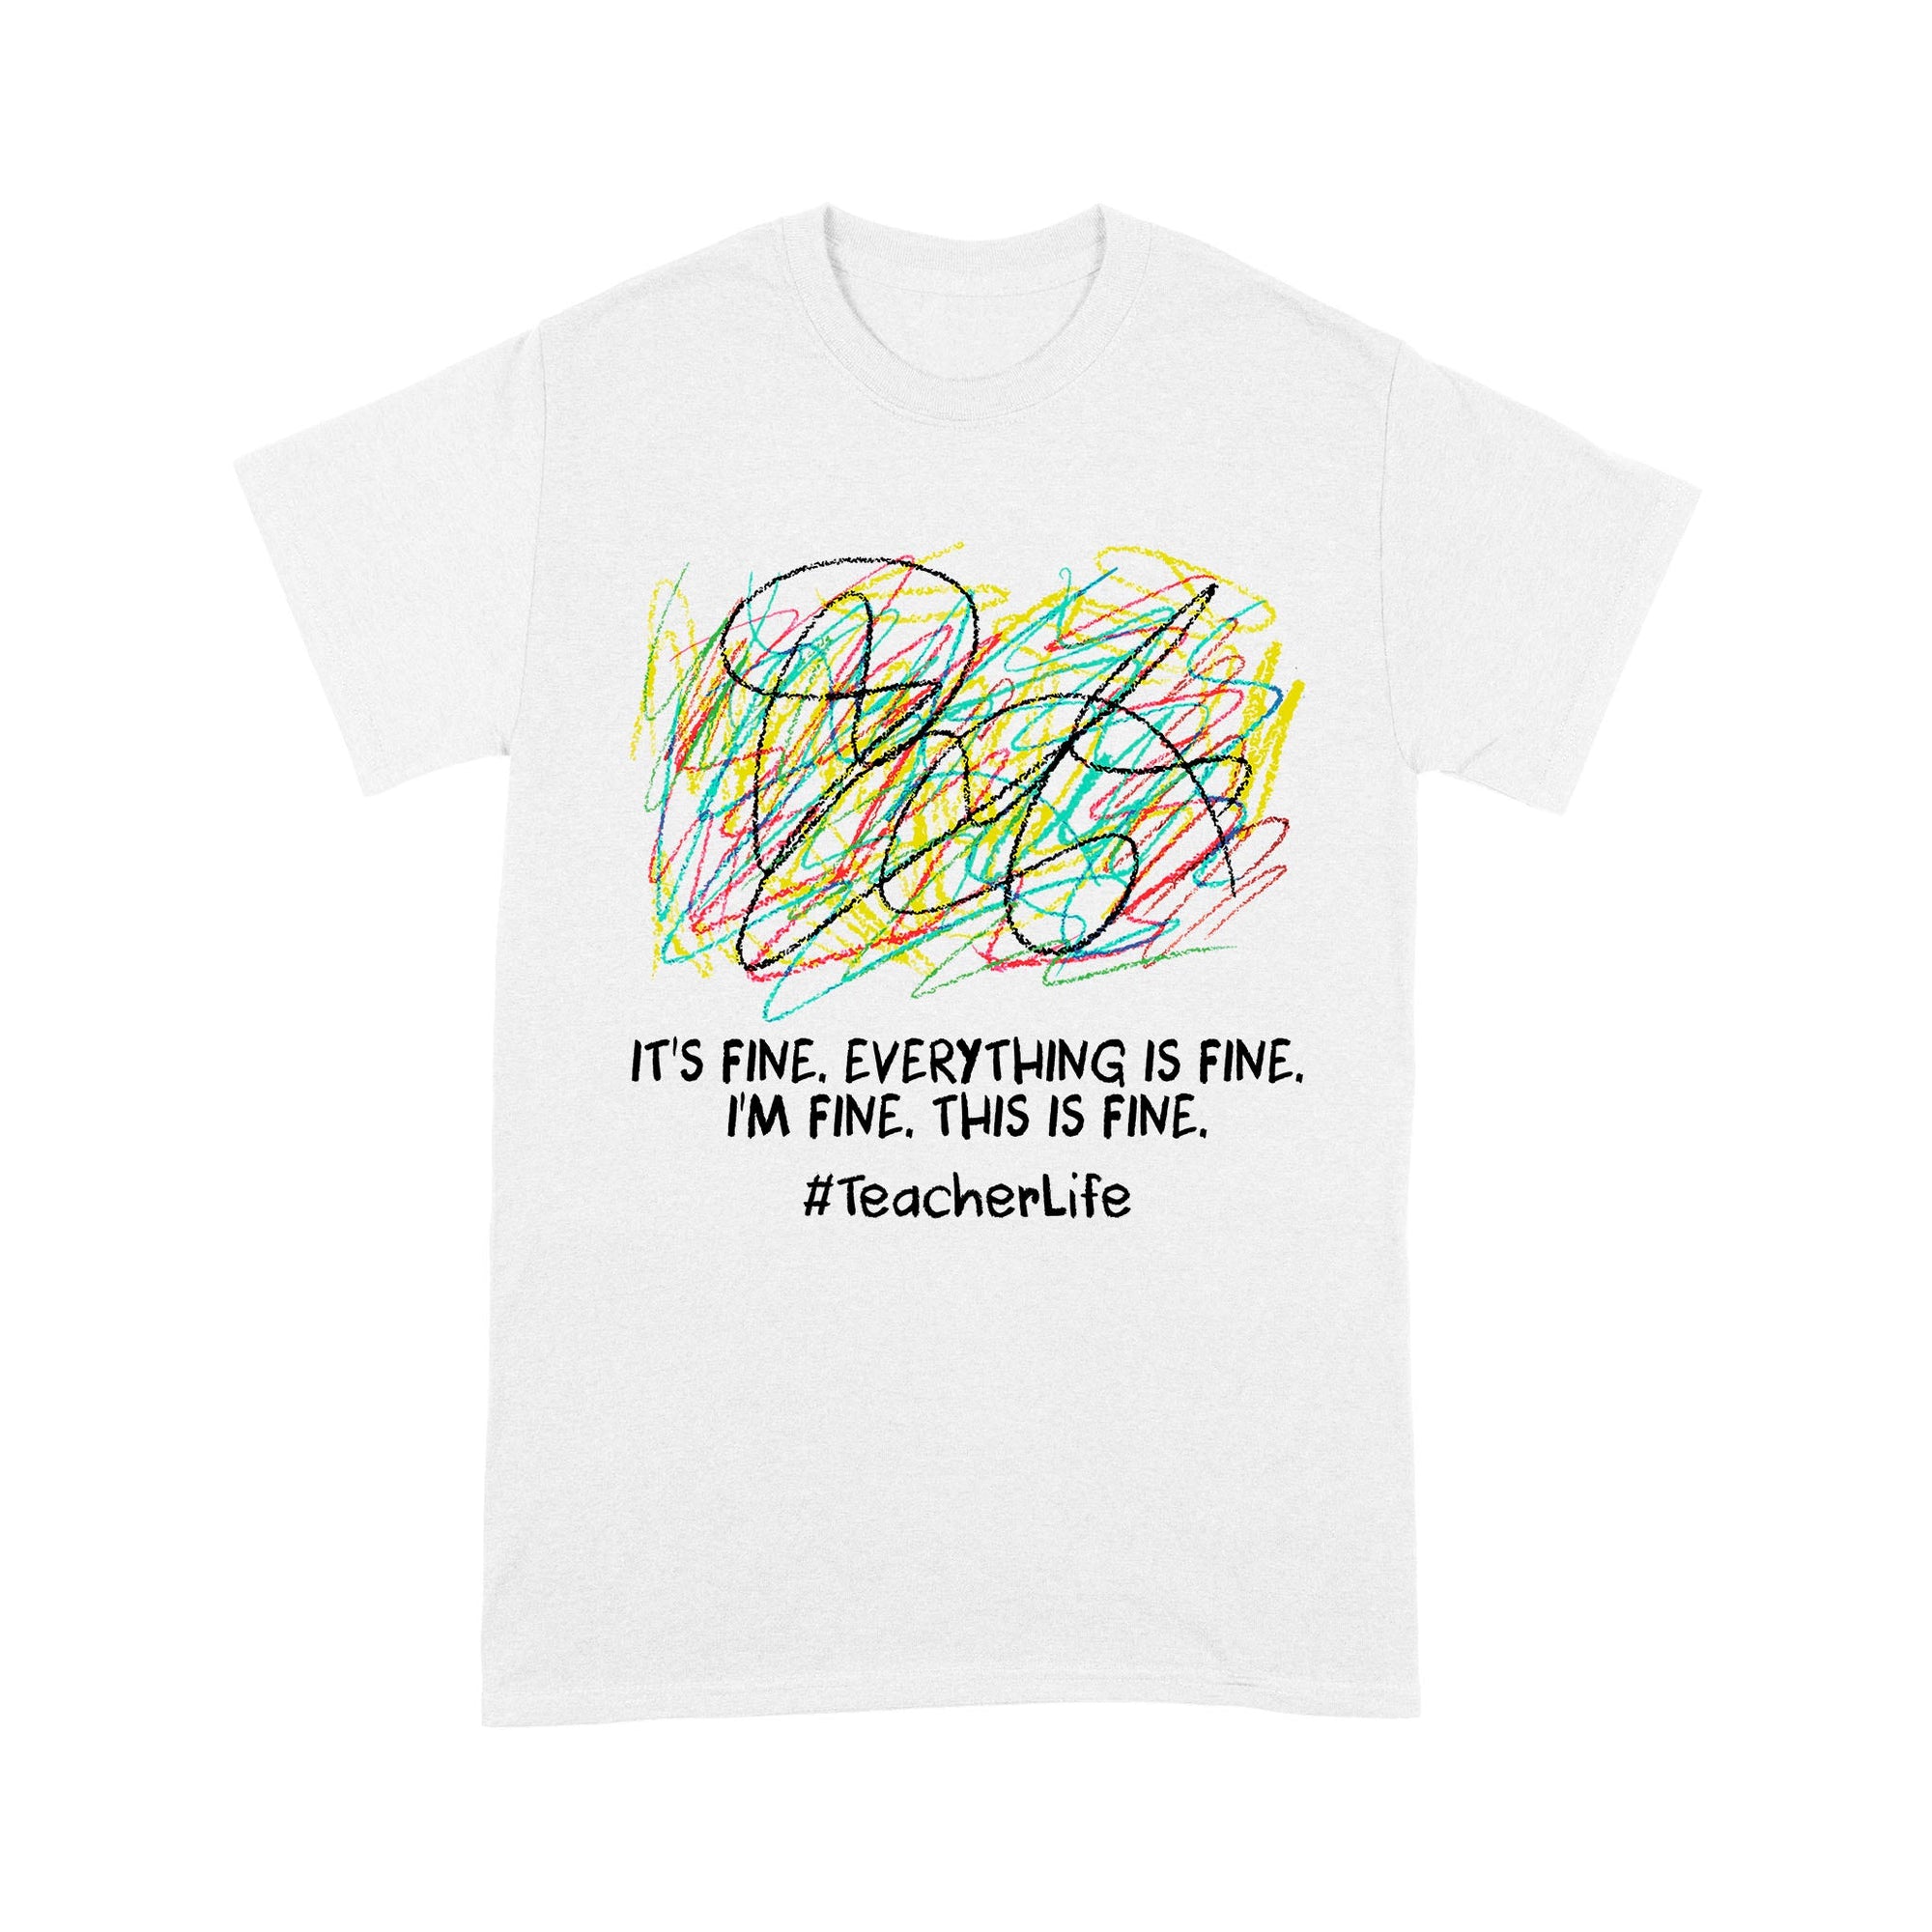 It's fine i'm fine everything is fine, i'm fine, this is fine, #TeacherLife - Standard T-Shirt